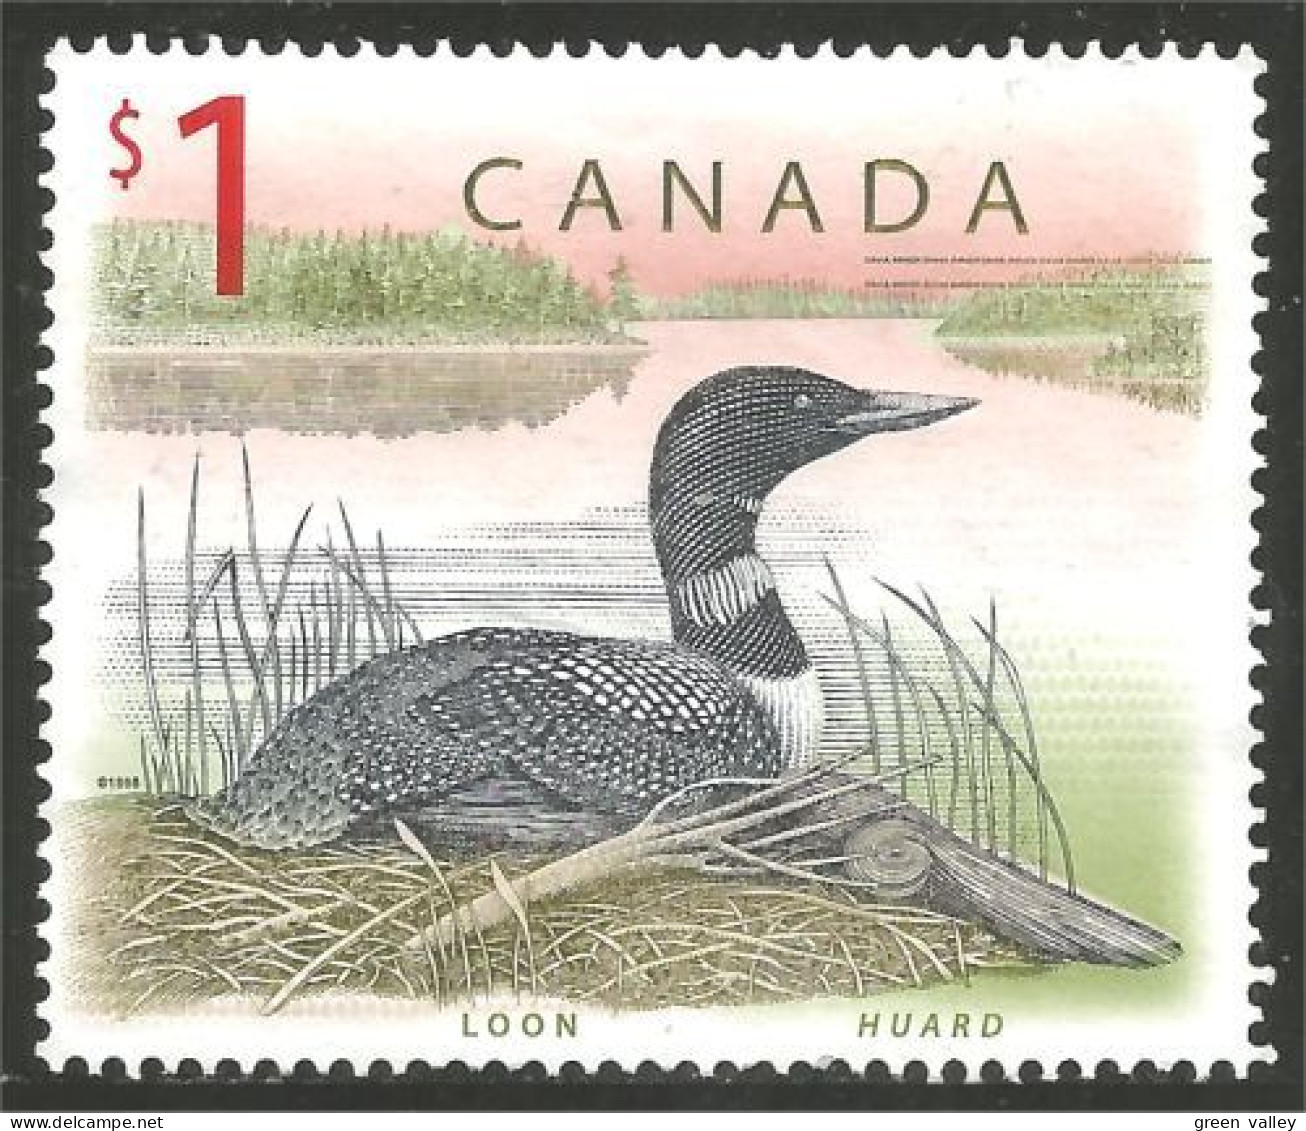 Canada Loon Huard Canard Duck Ente Anatra Pato Eend Mint No Gum (10-003) - Ducks